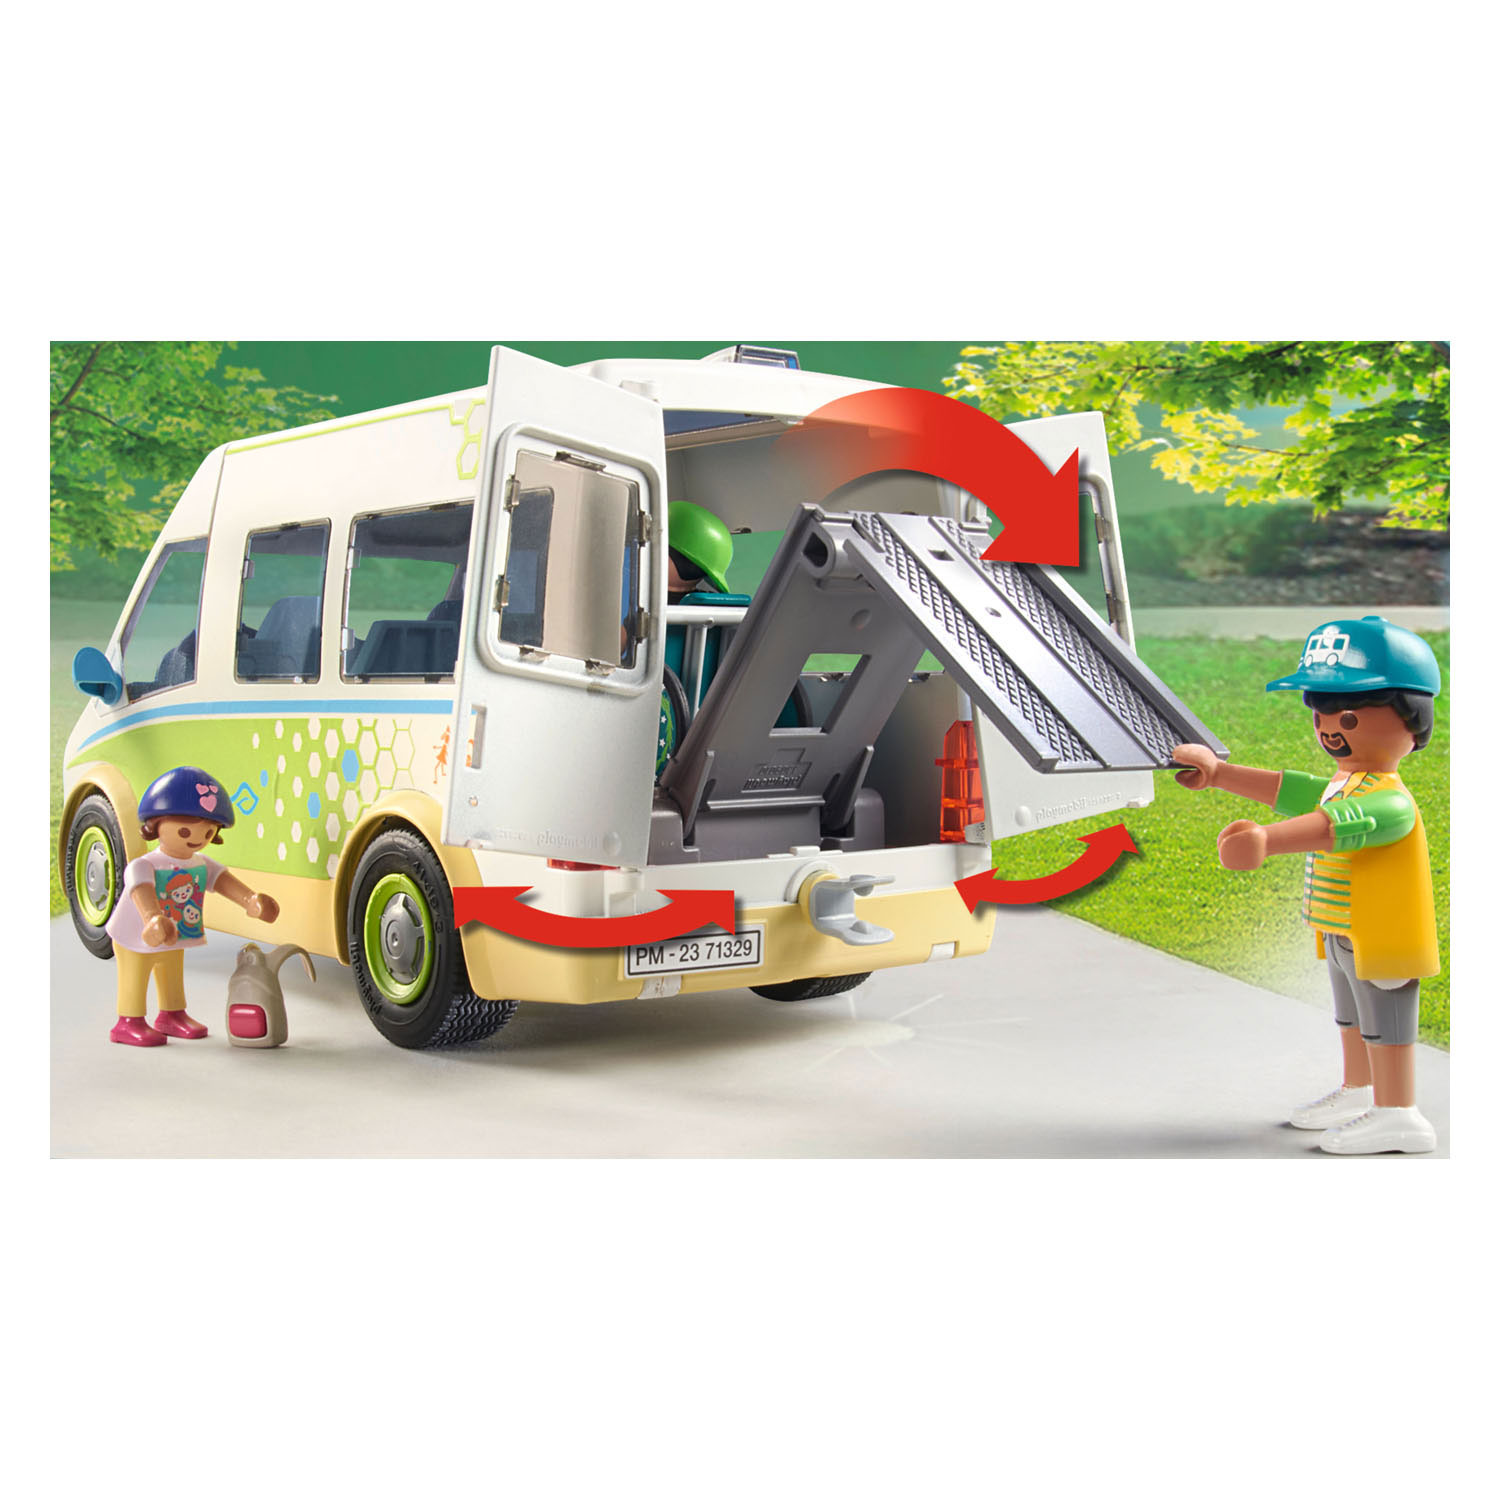 Playmobil City Life Schoolbus - 71329